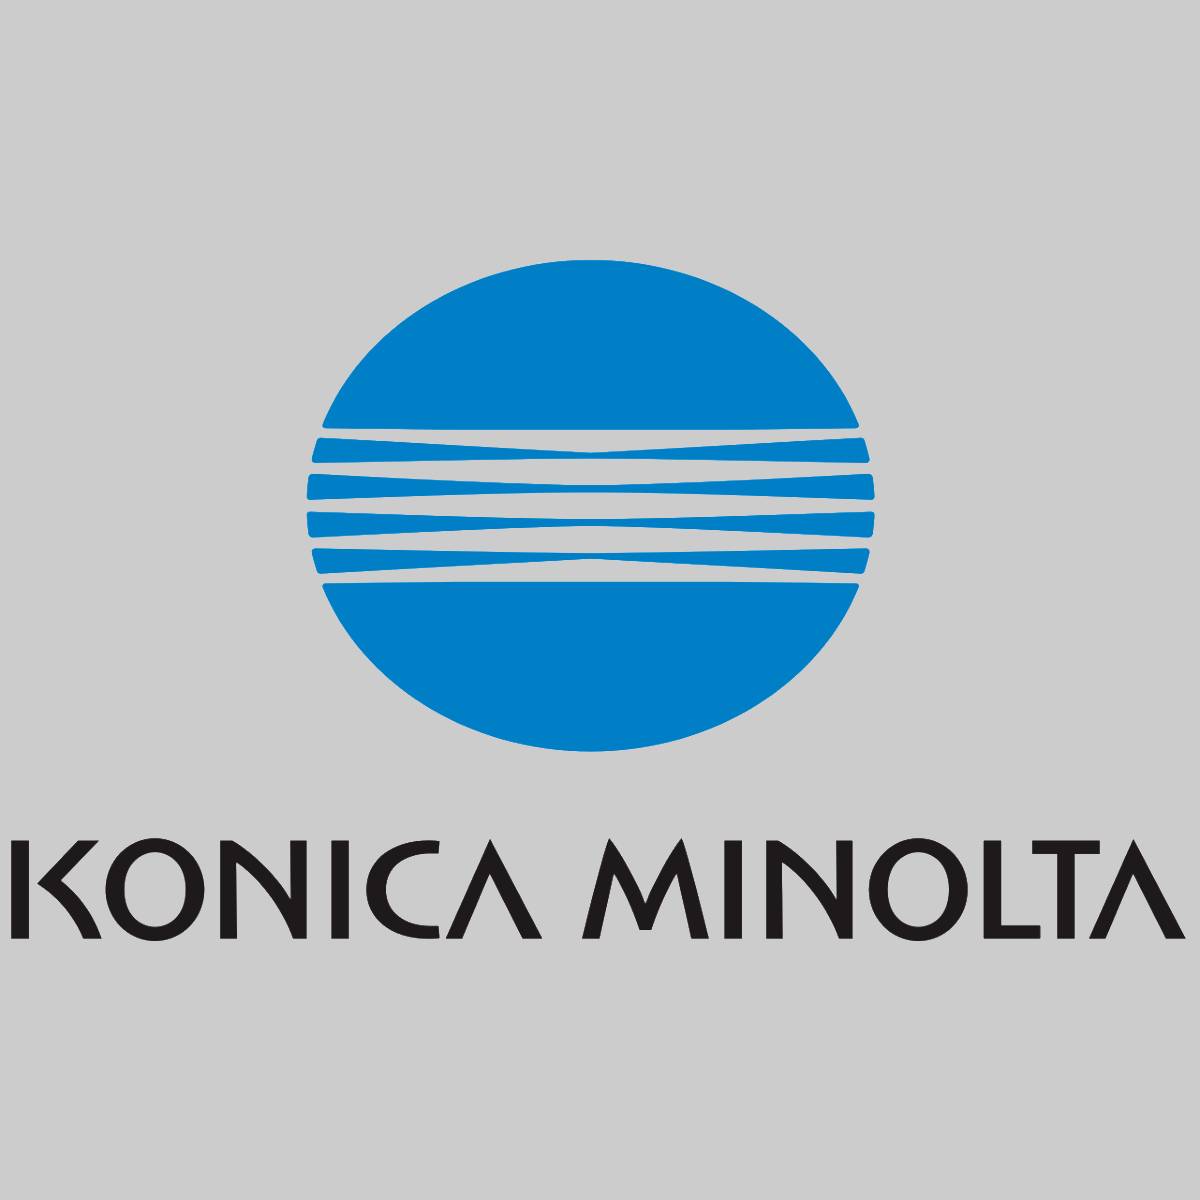 Original Konica Minolta TN323 Toner Schwarz Black Bizhub 227 287 367 A87M050 NEU